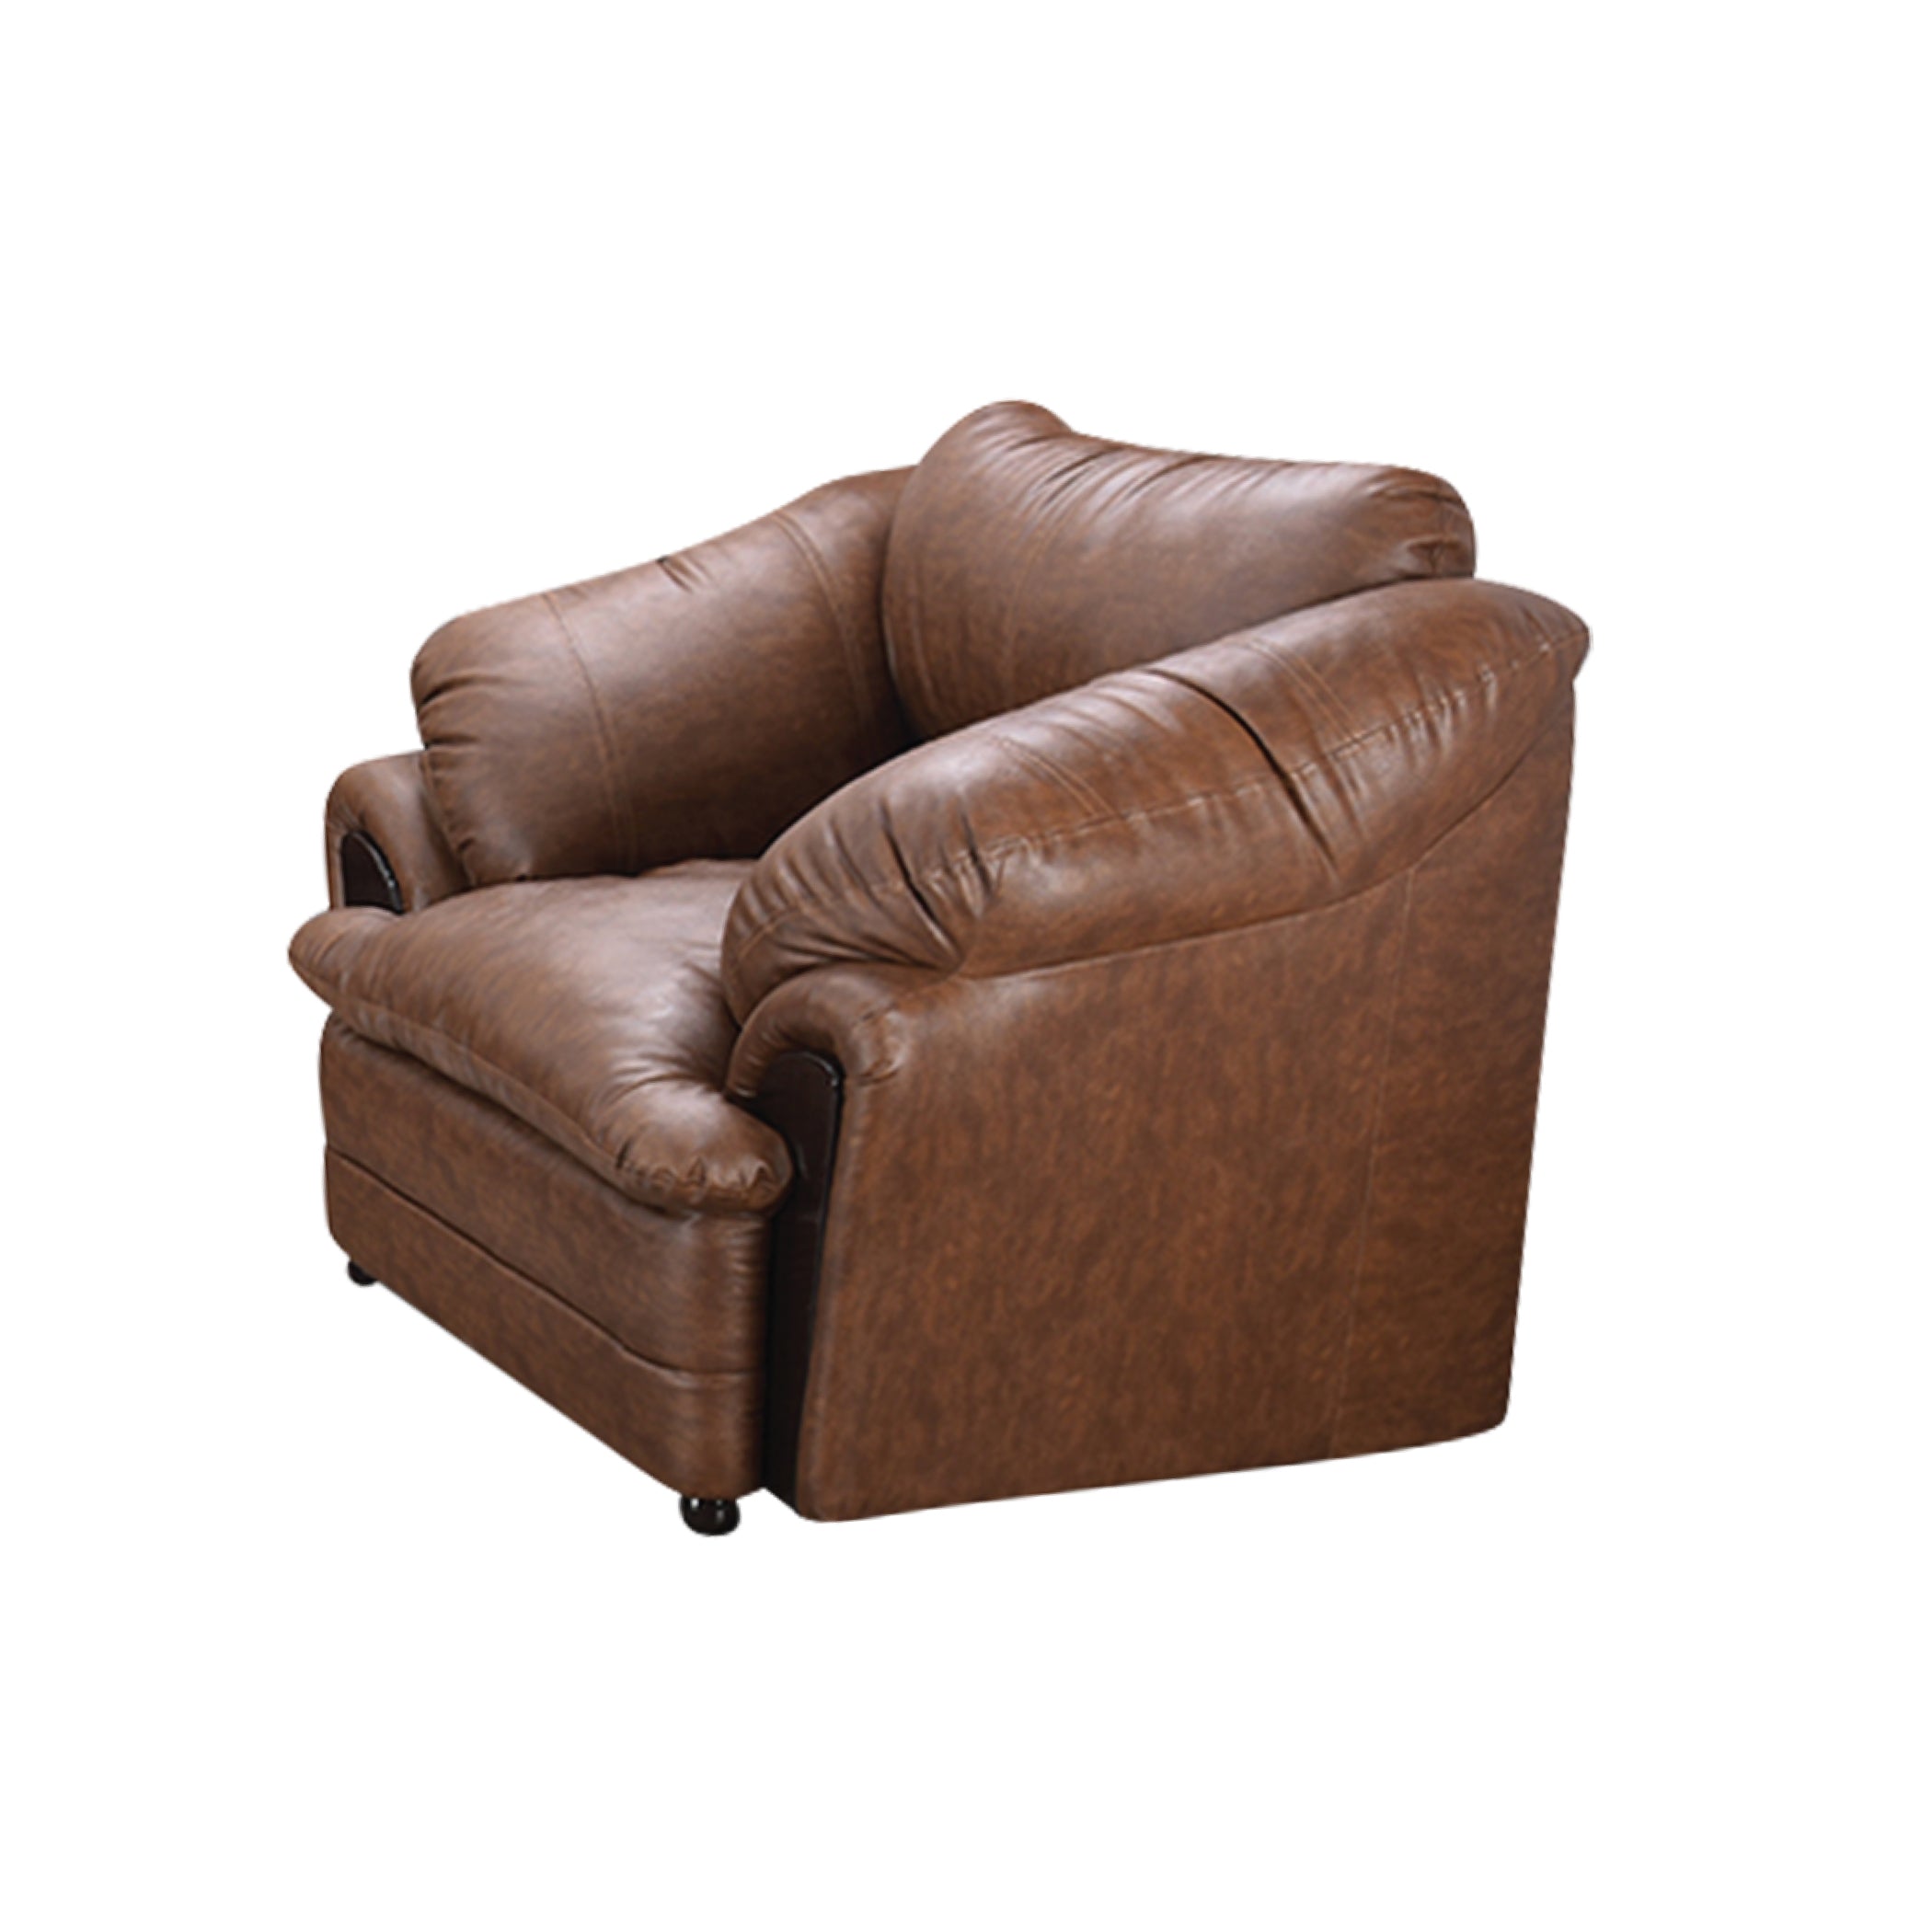 Coppenhagen Brown 1S Sofa by Zorin Zorin